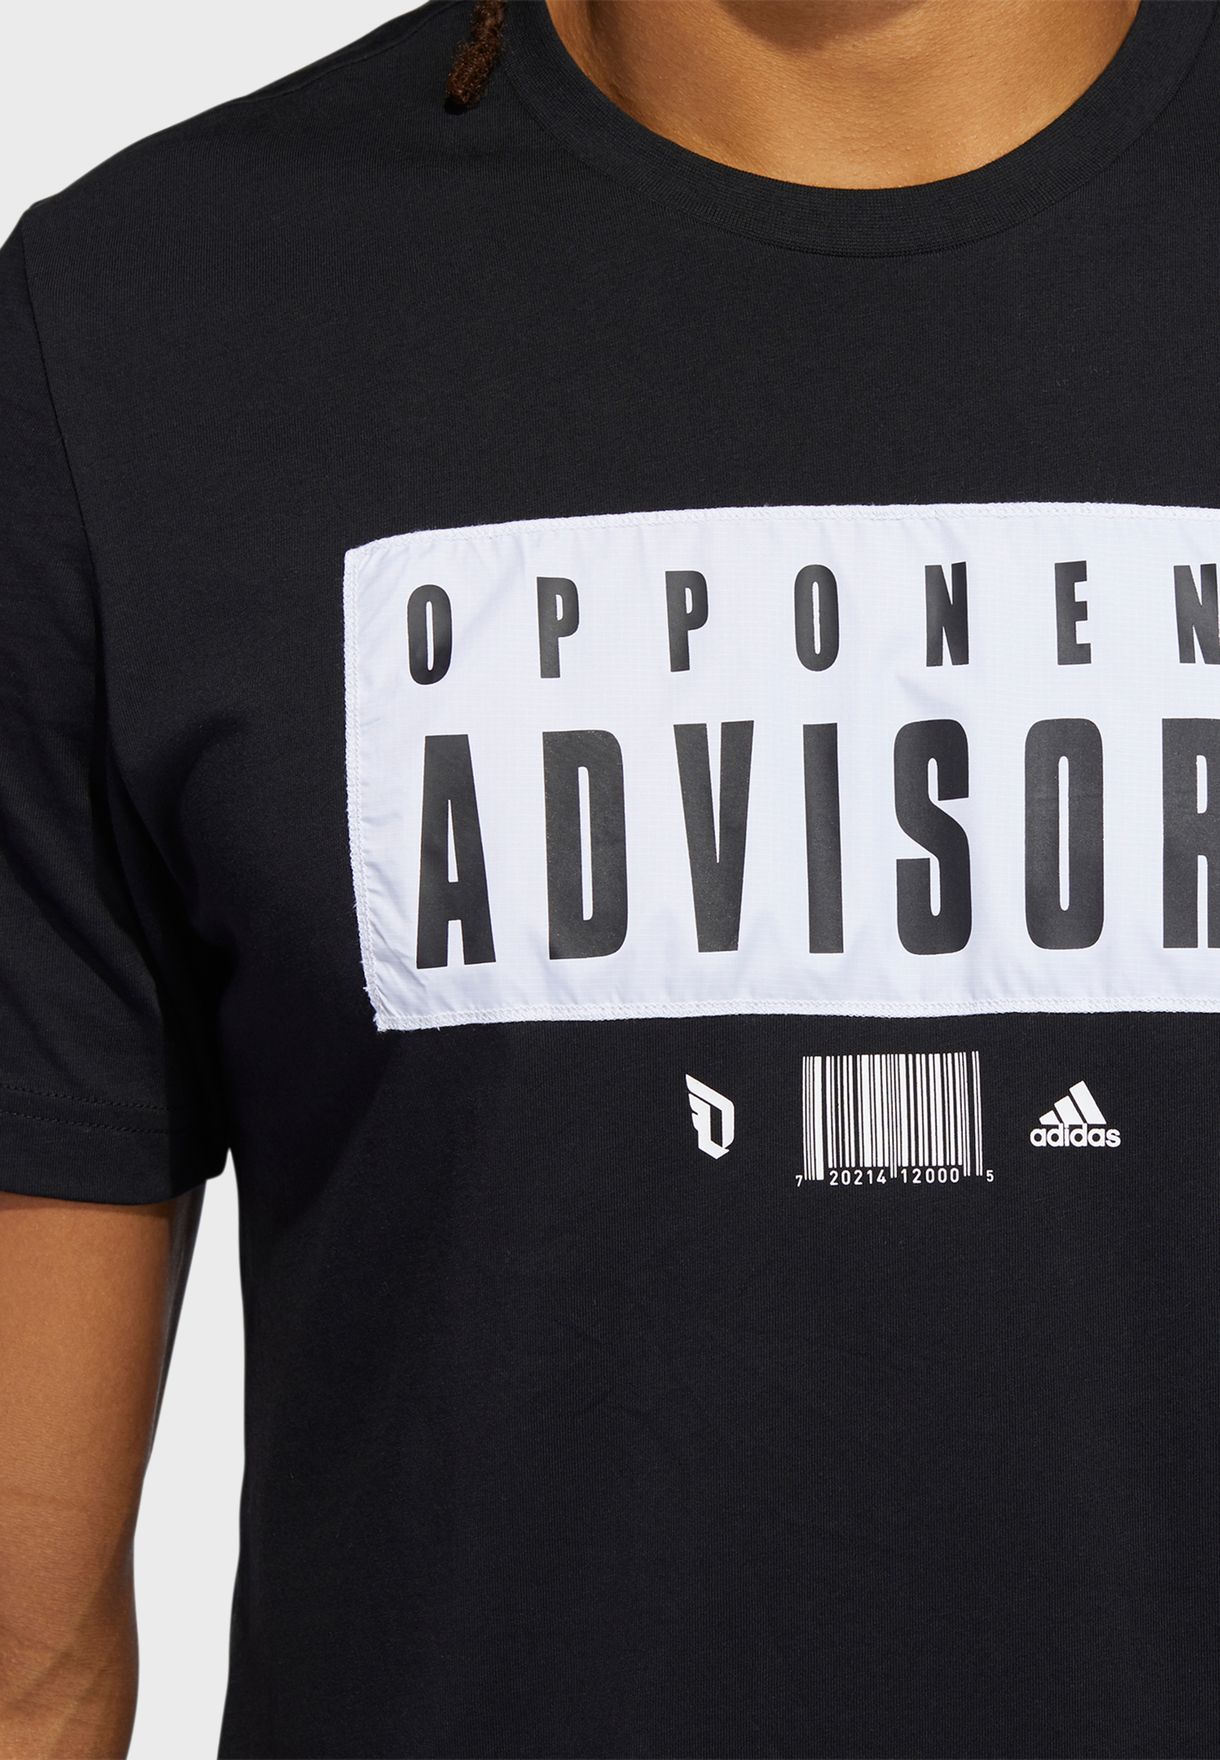 Dame Advisory T-Shirt